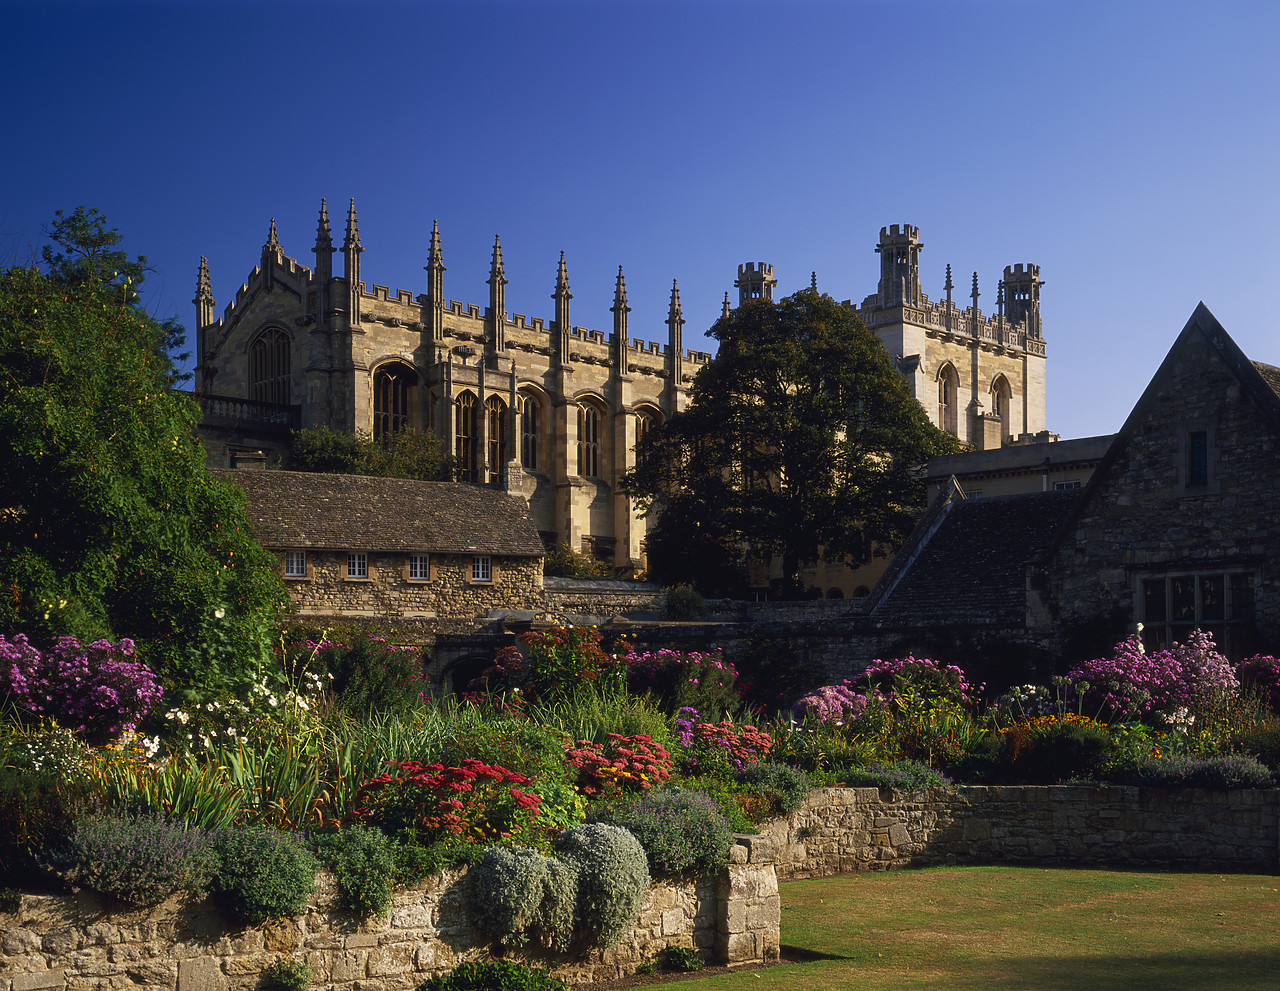 #966165-1 - Christ Church, Oxford, Oxfordshire, England